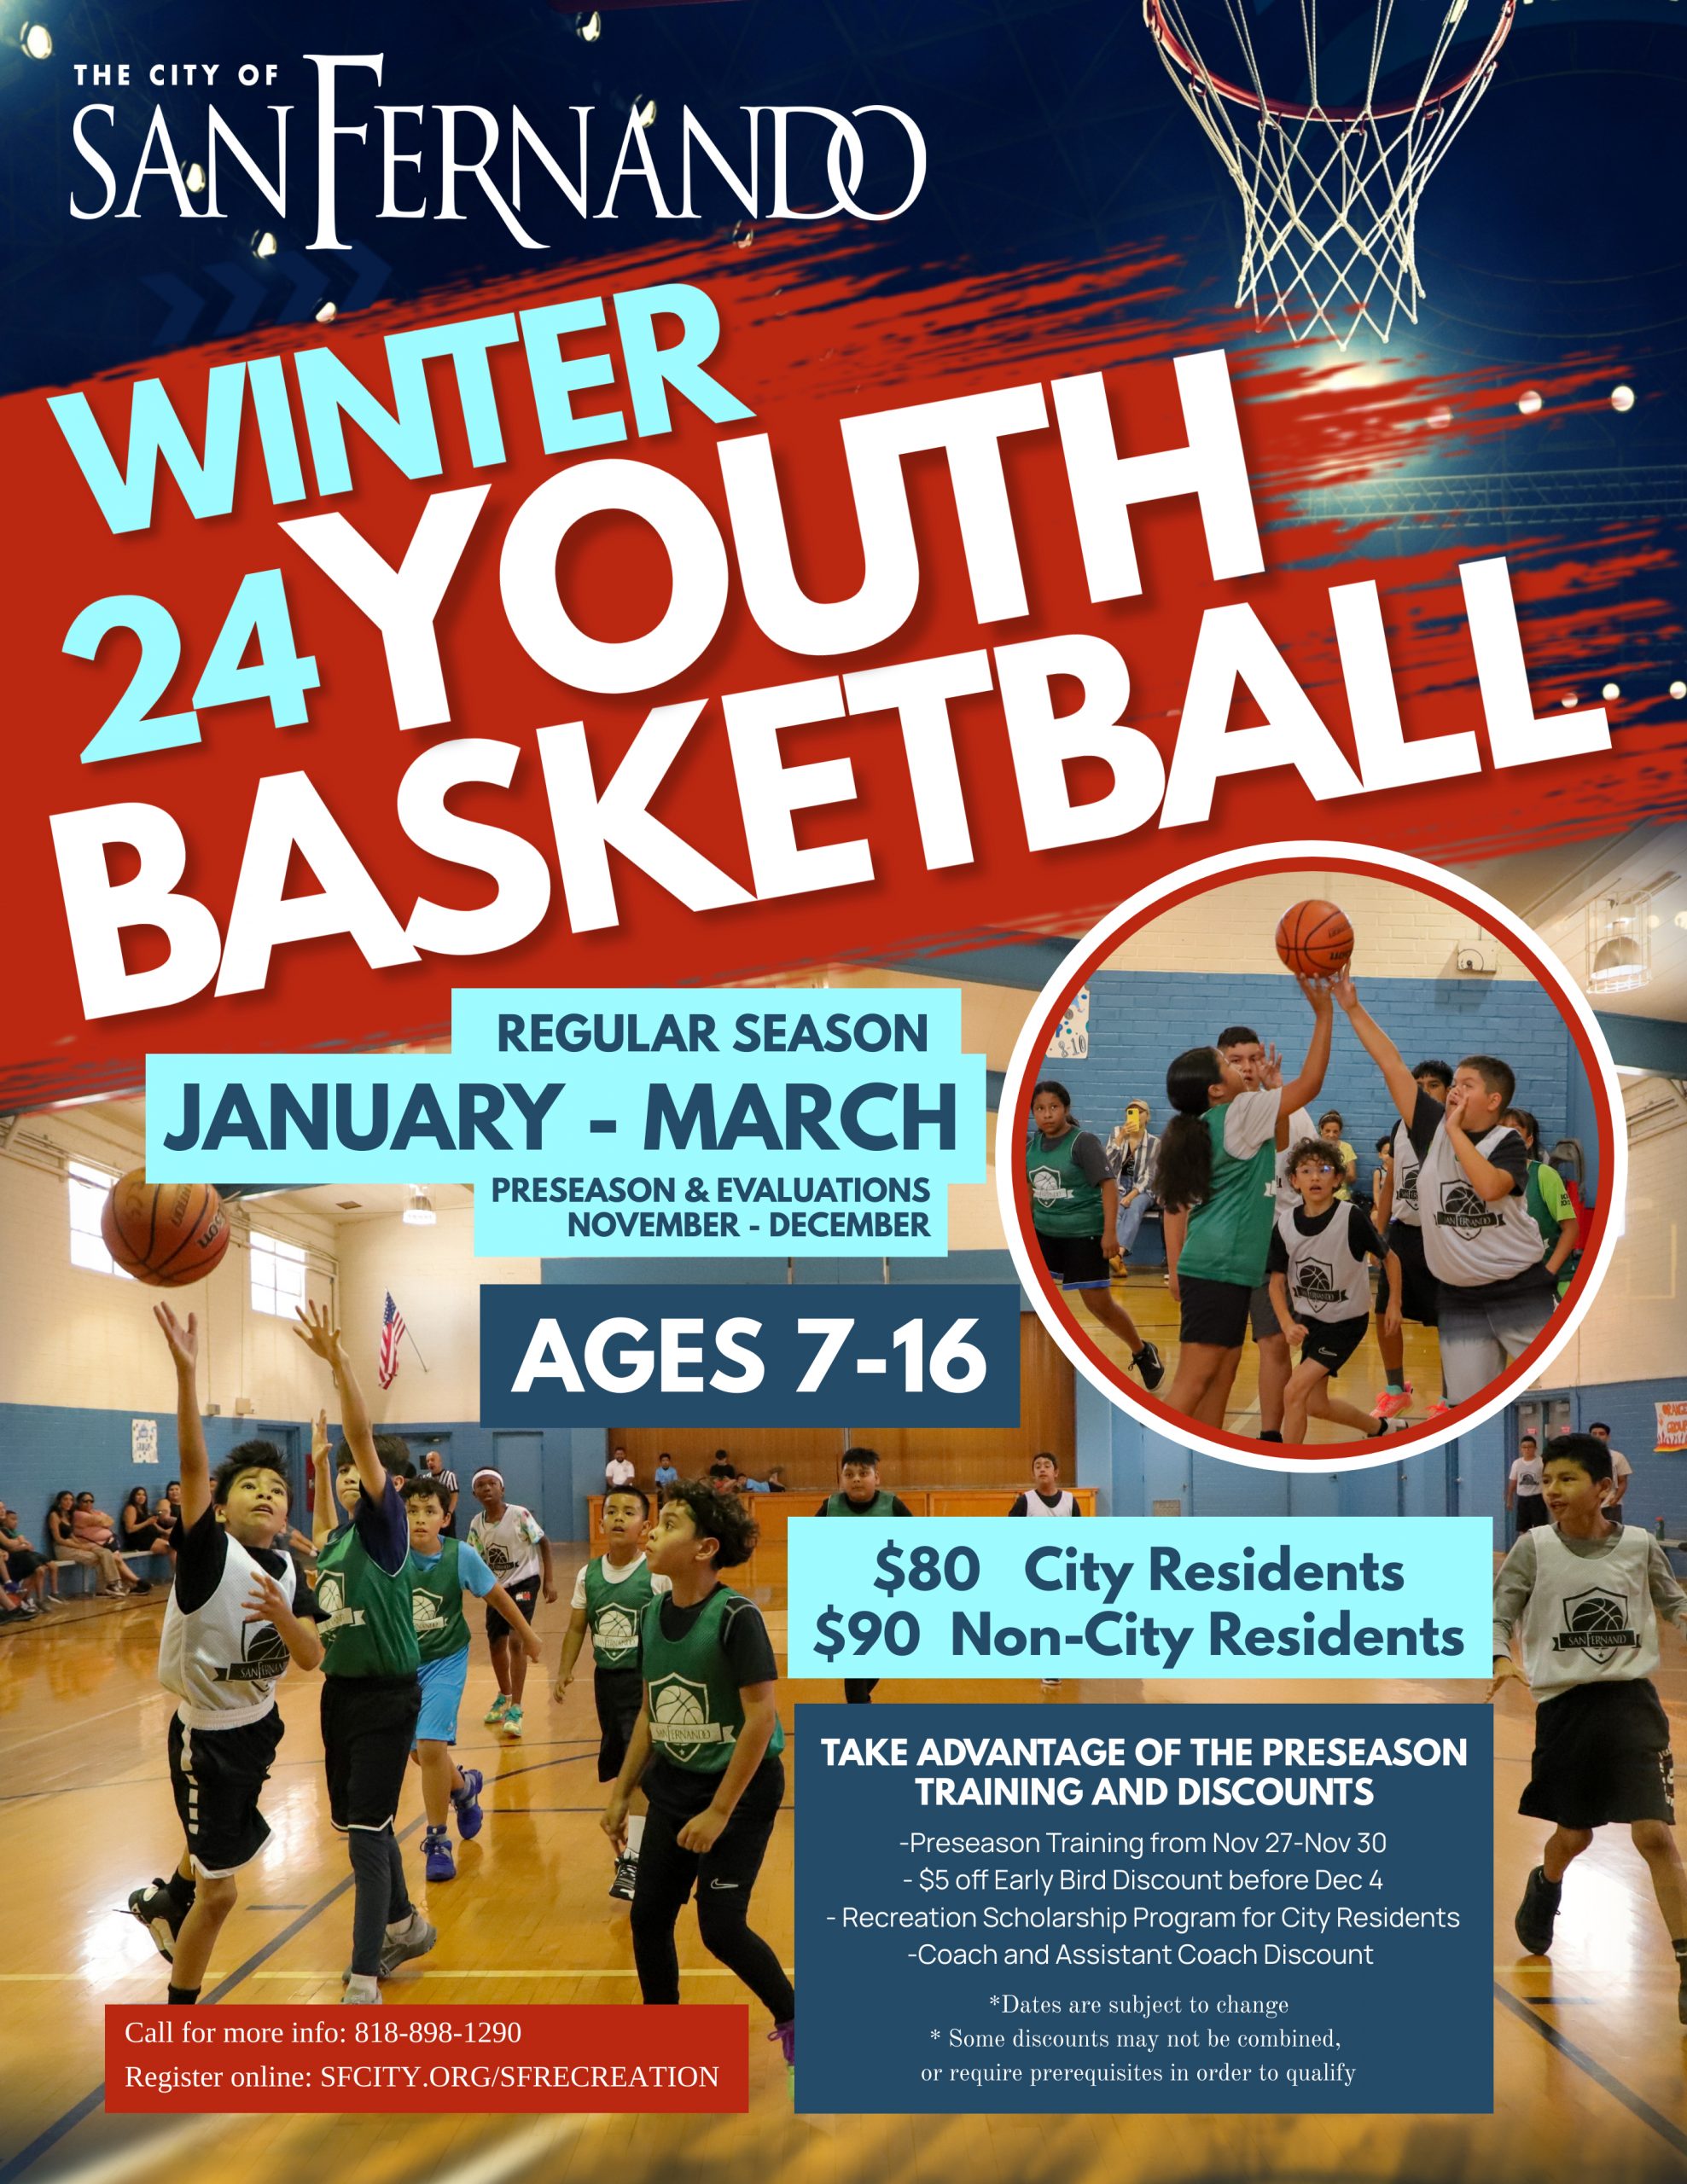 Winter 24 Youth Basketball